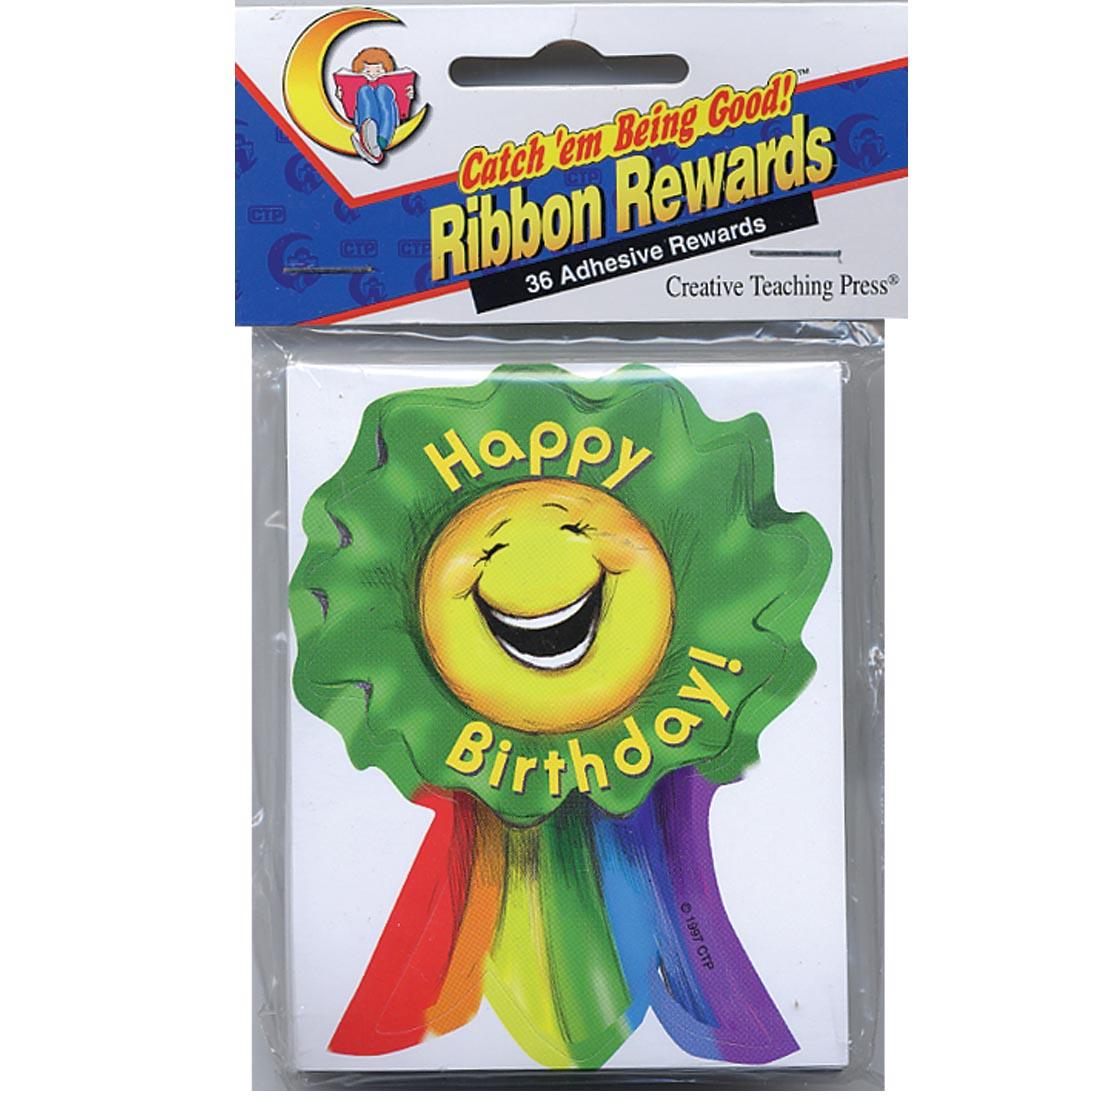 Happy Birthday Smiling Ribbon Rewards by Creative Teaching Press